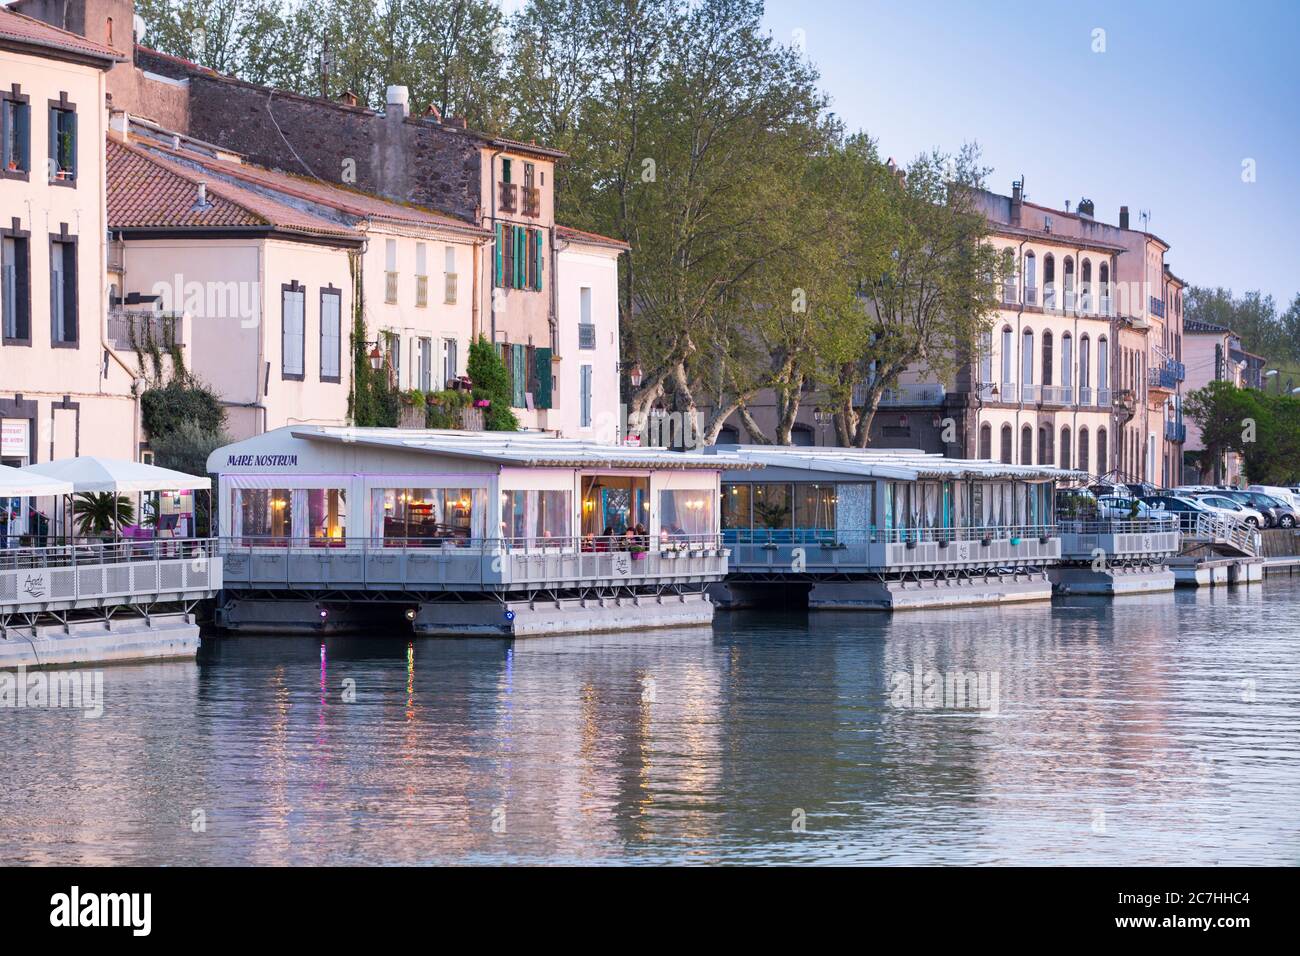 Boat restaurants, Agde, Canal du Midi, Frankreich, France Stock Photo